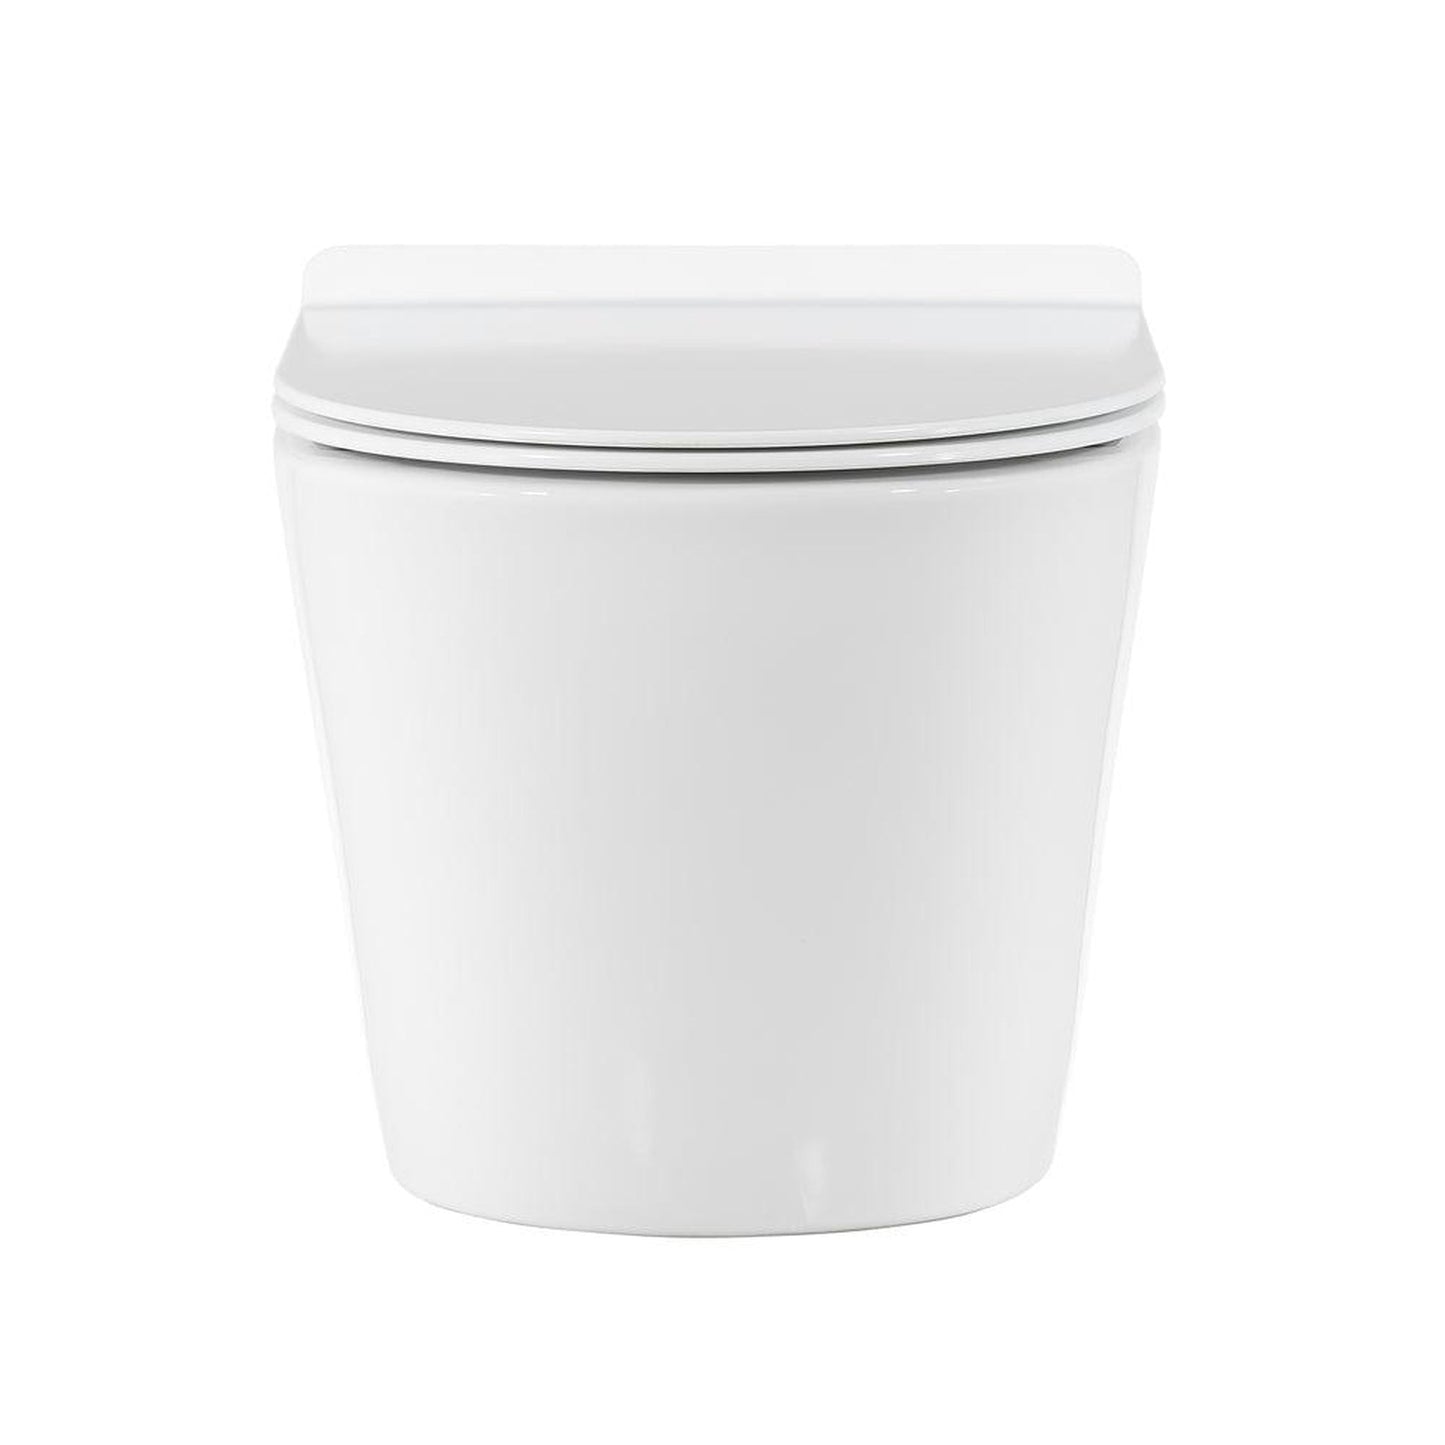 Swiss Madison Calice 14" x 13" Round White Wall-Hung Toilet Bowl